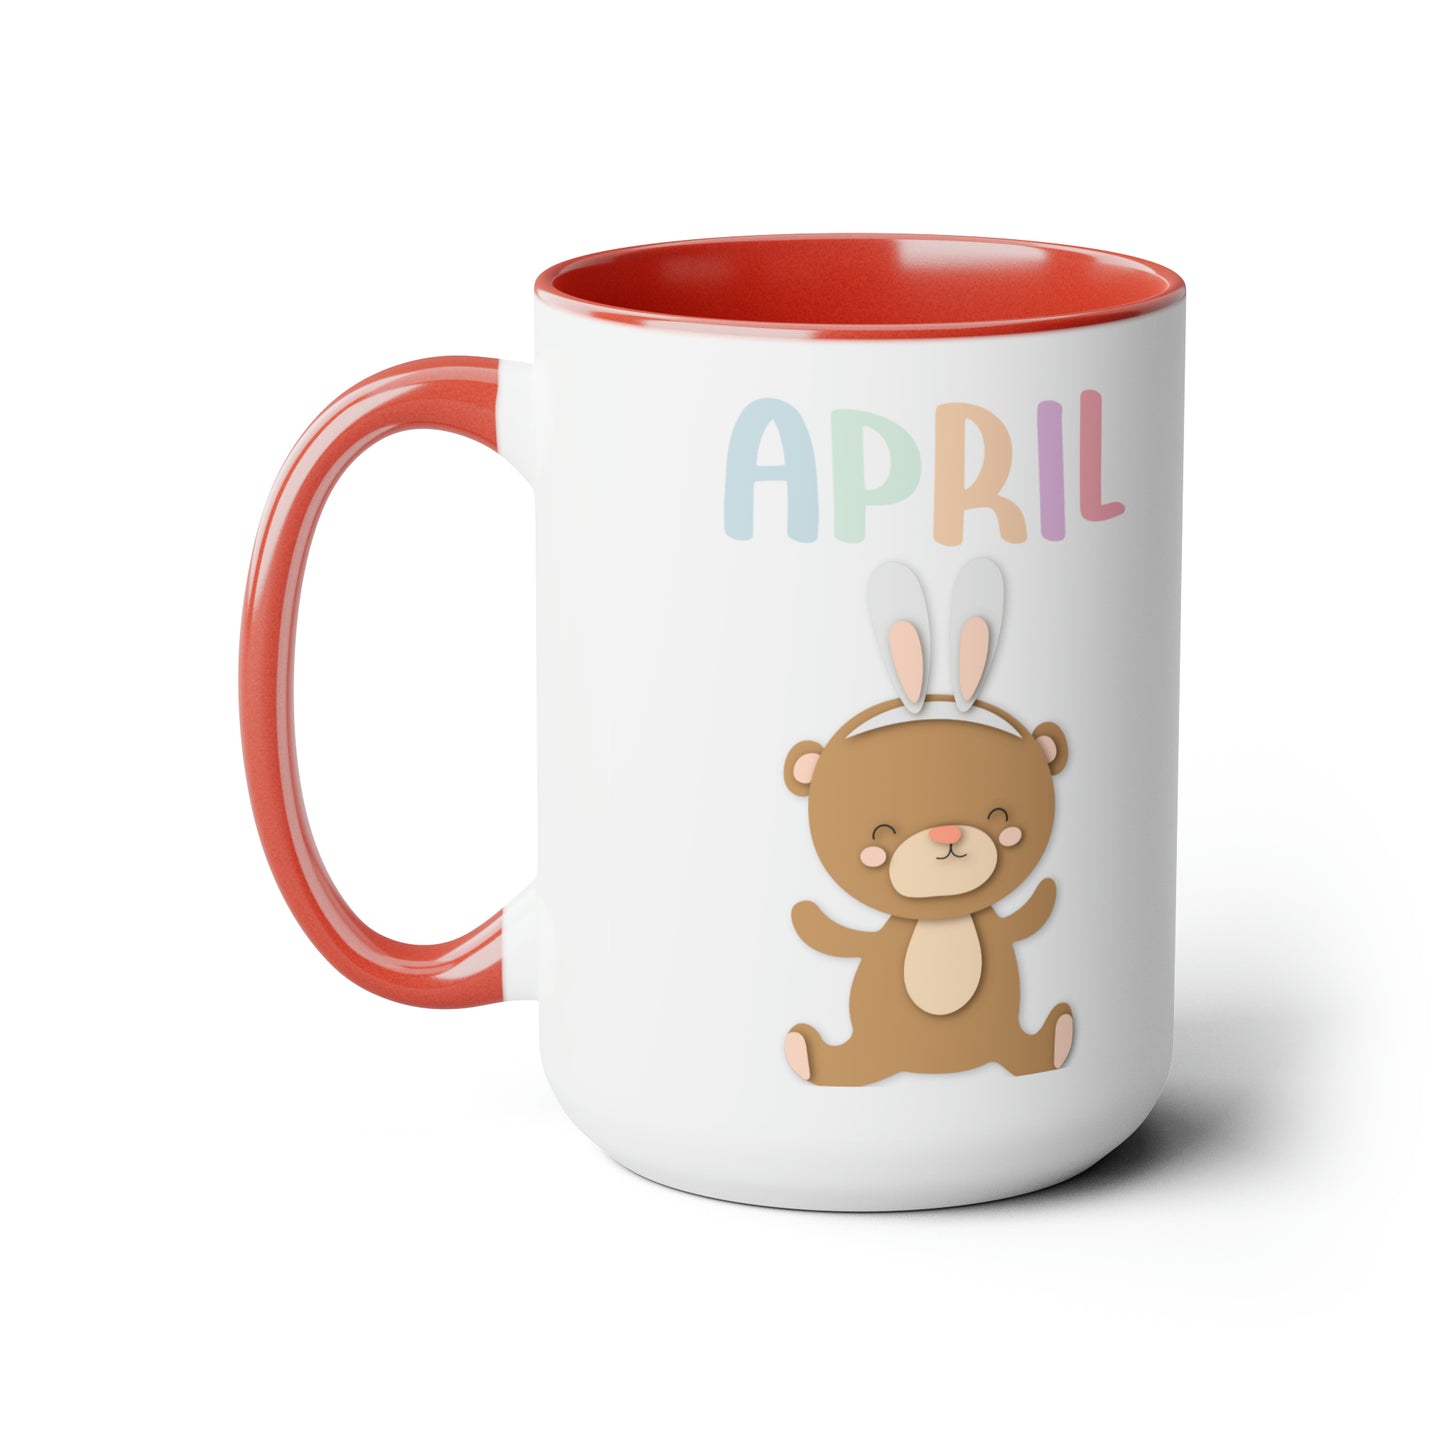 April Two-Tone Coffee Mugs, 15oz